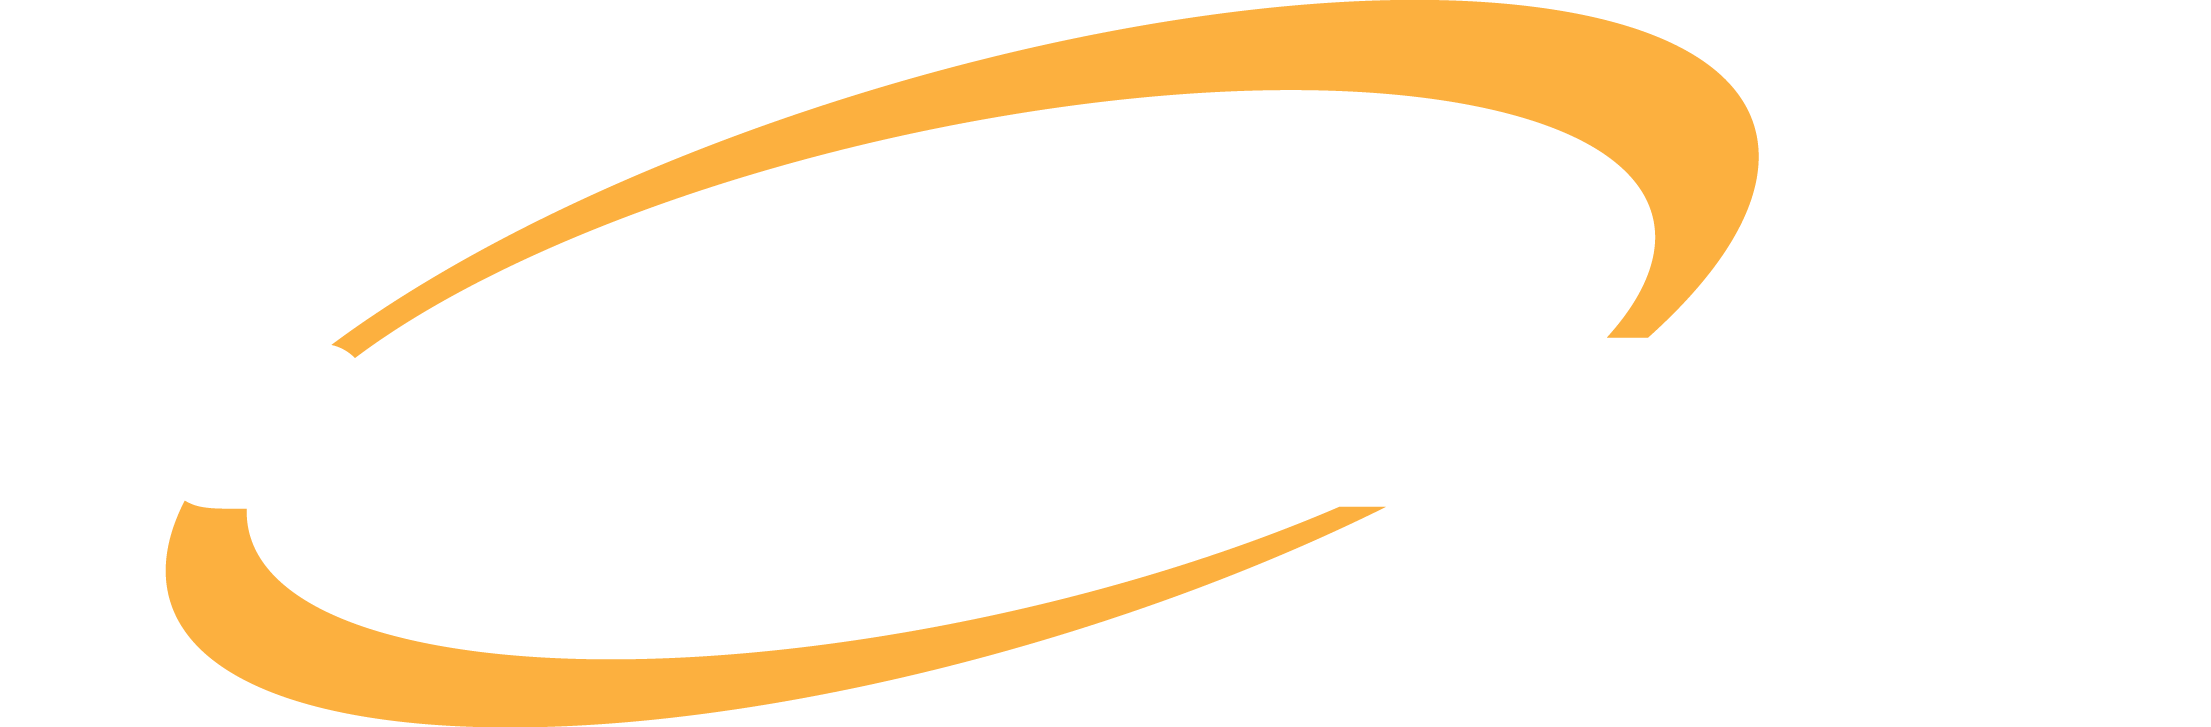 Centro Energy Co. Ltd. Logo